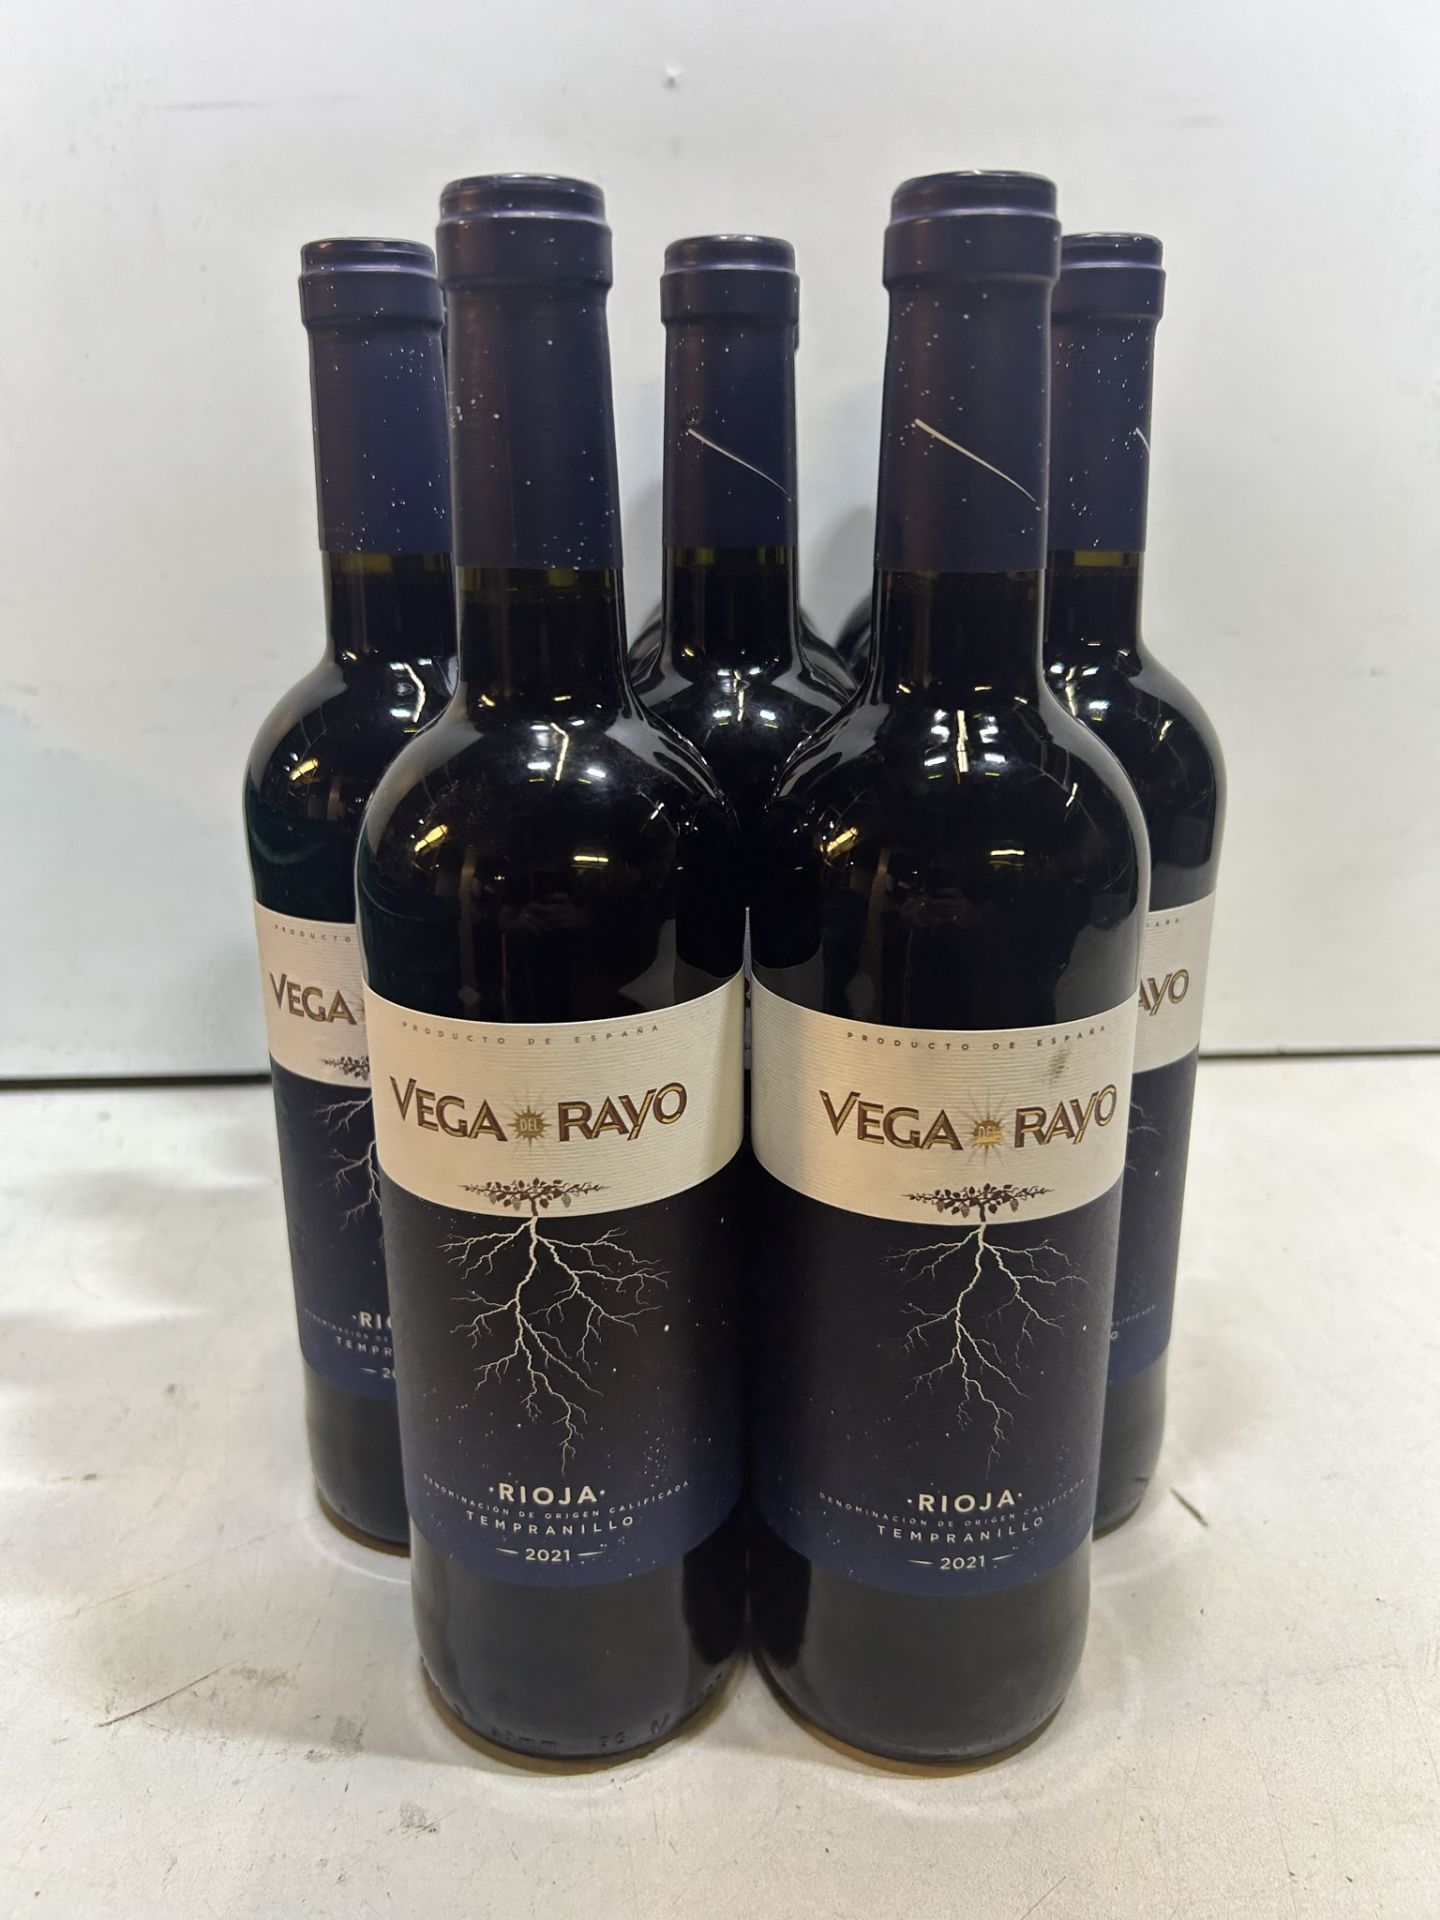 14 x Bottles of Vega Rayo Rioja Tempranillo Wine